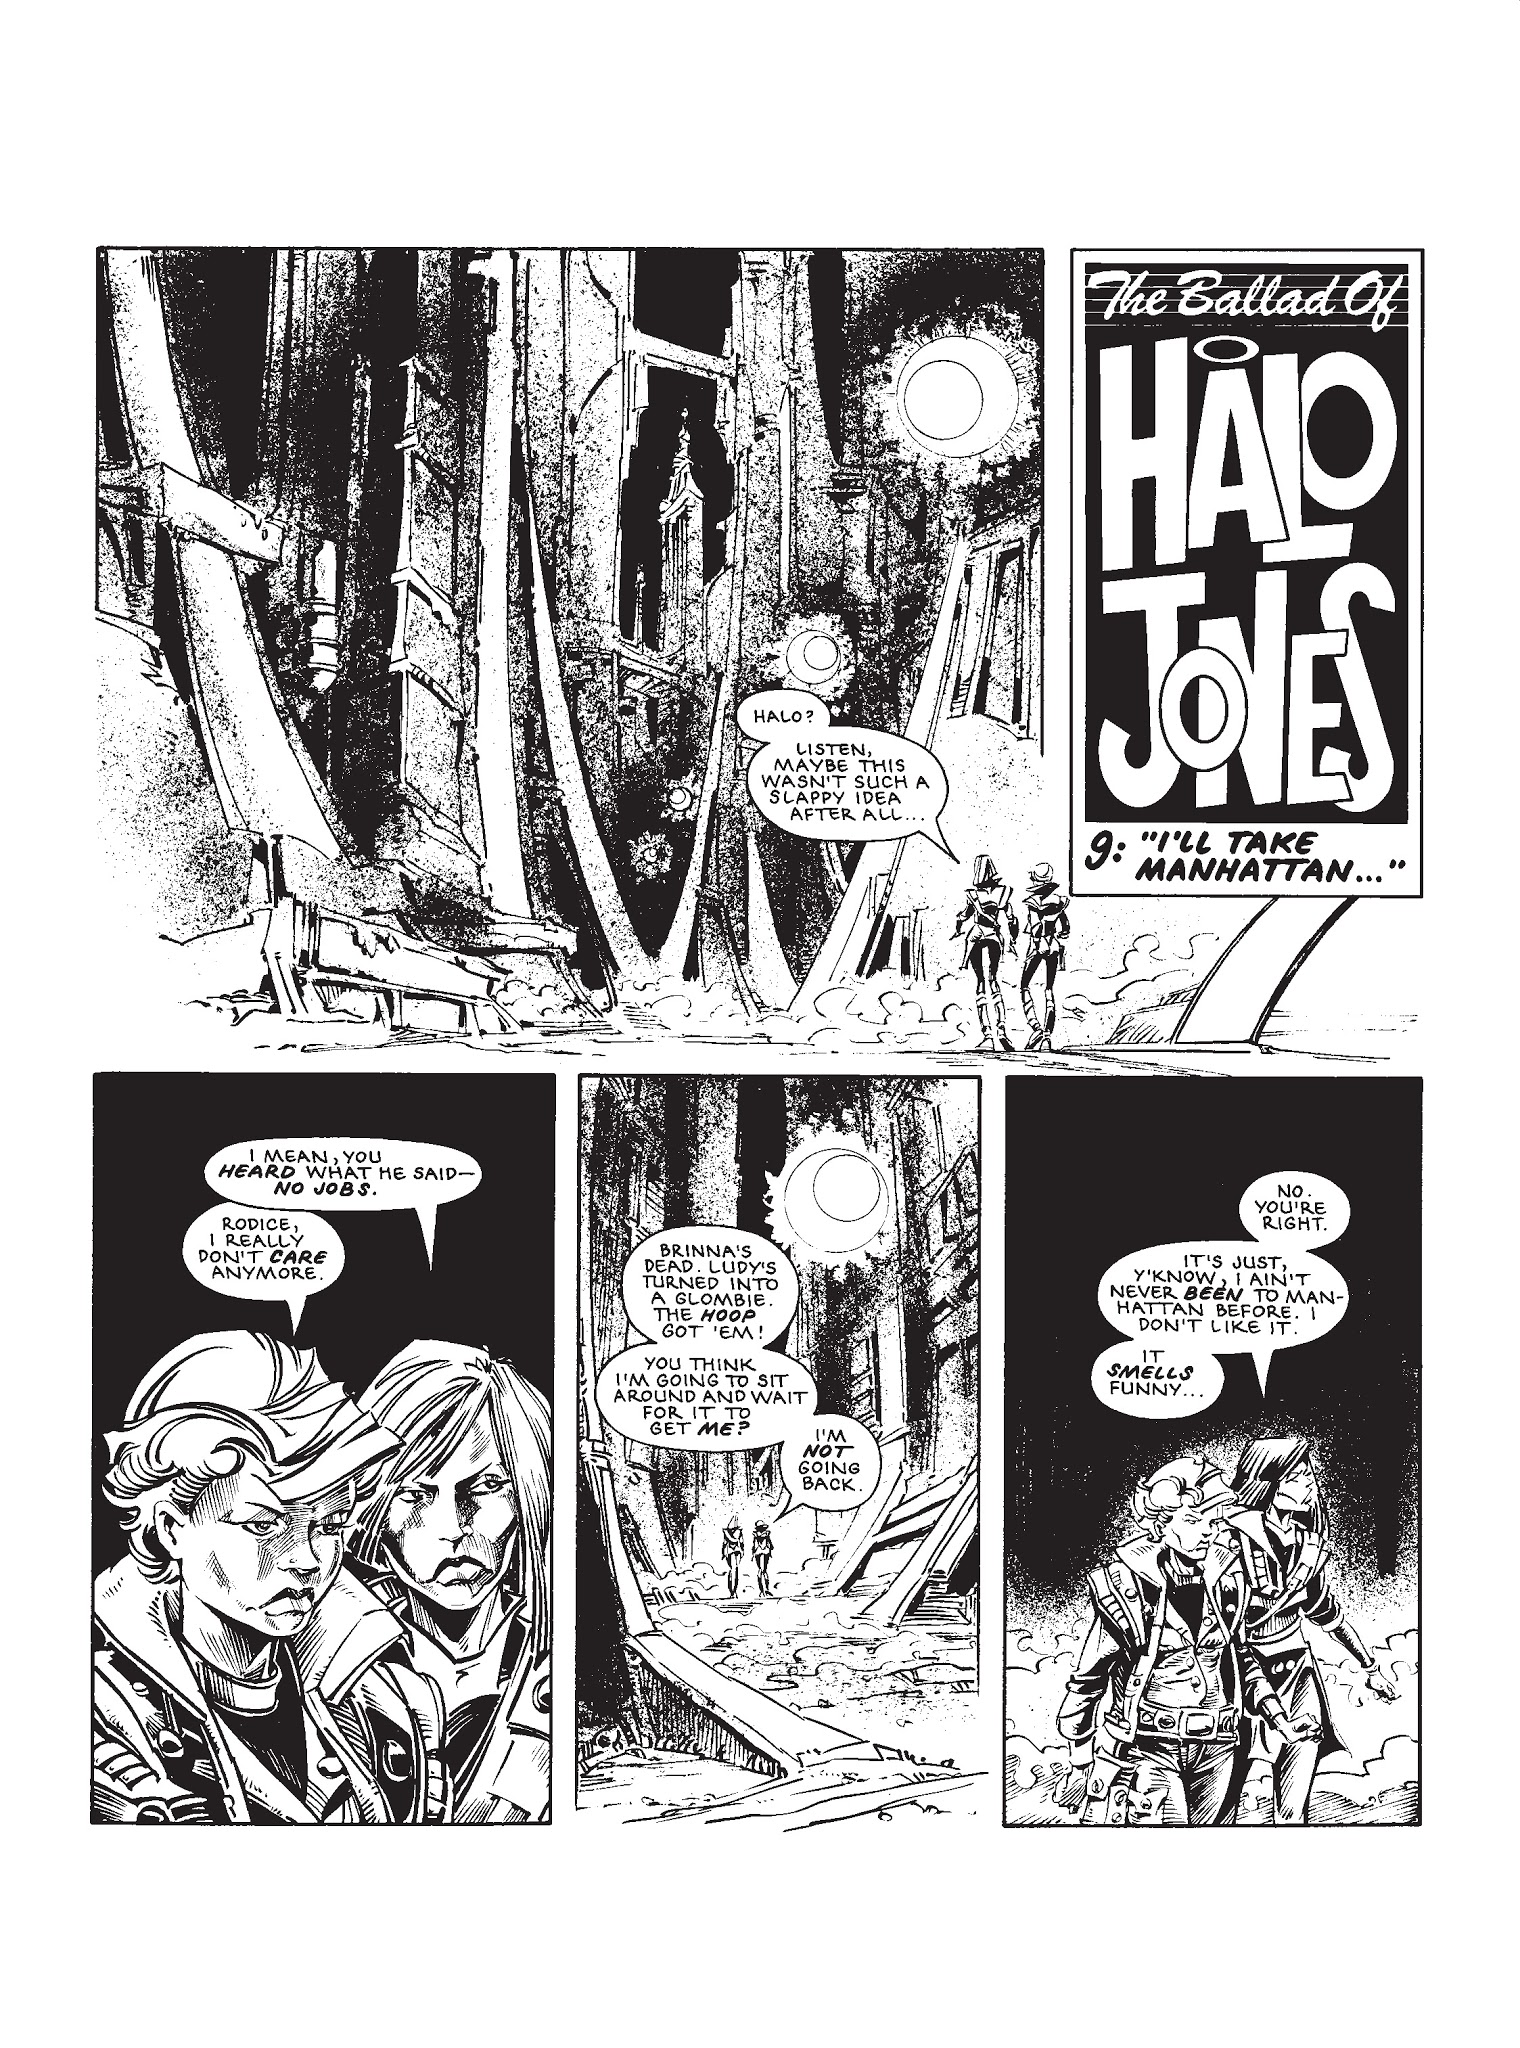 Read online The Ballad of Halo Jones comic -  Issue # TPB - 47